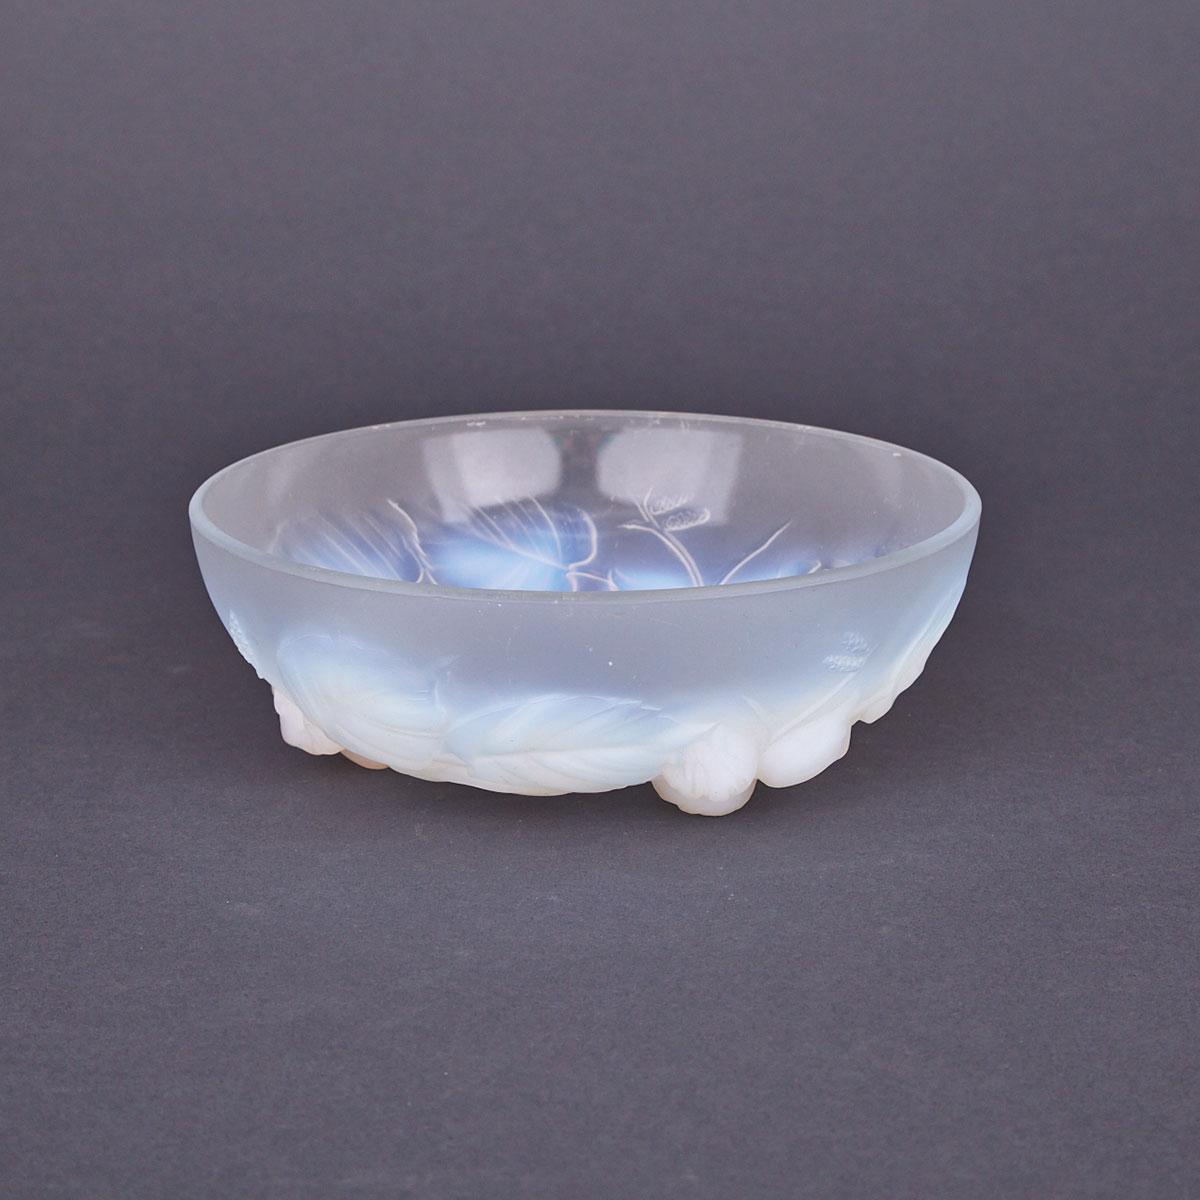 Etling ‘Noisettes’ Opalescent Glass Bowl, 20th century